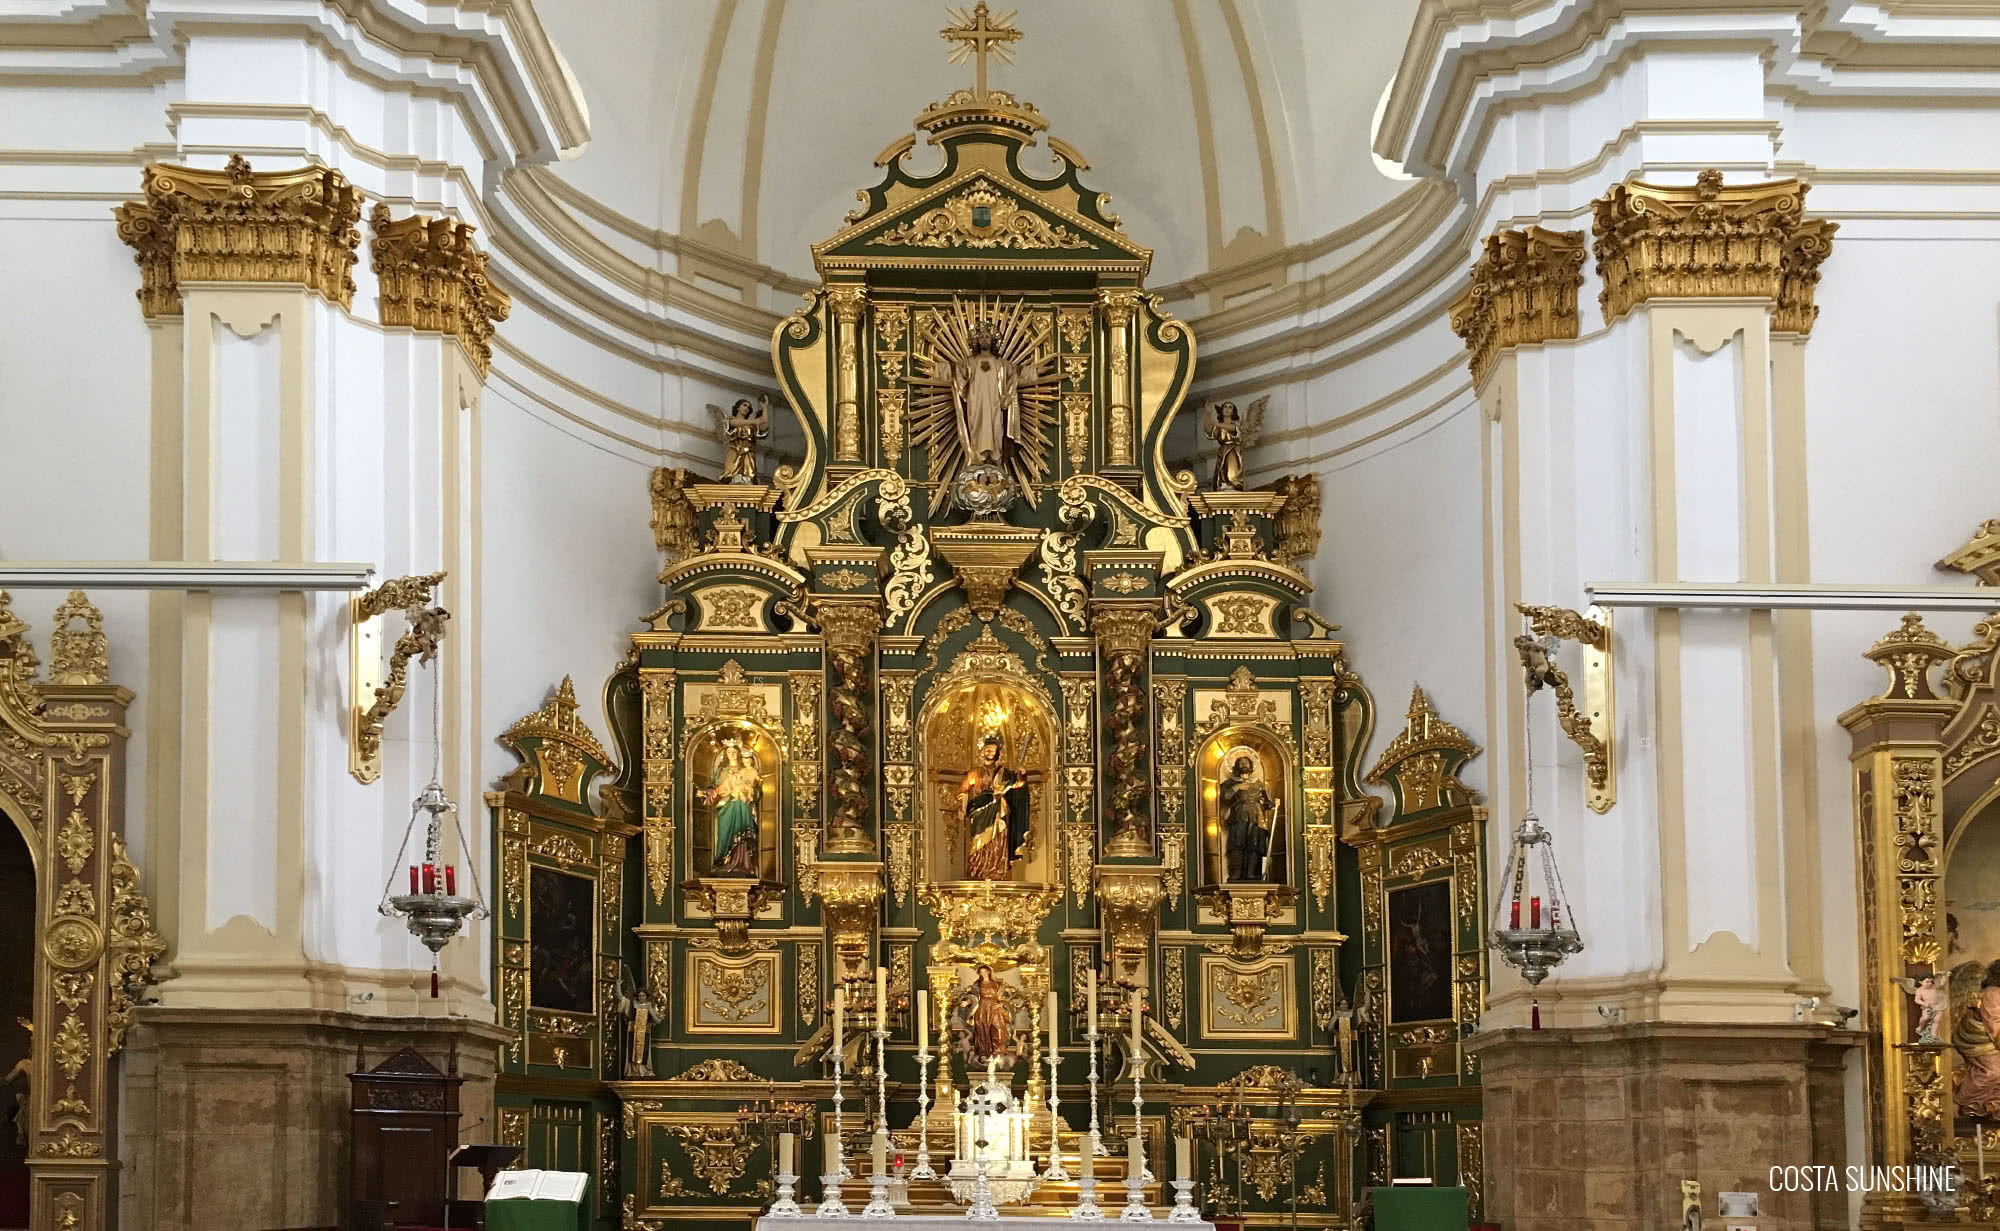 Marbella culture: Church of the incarnation